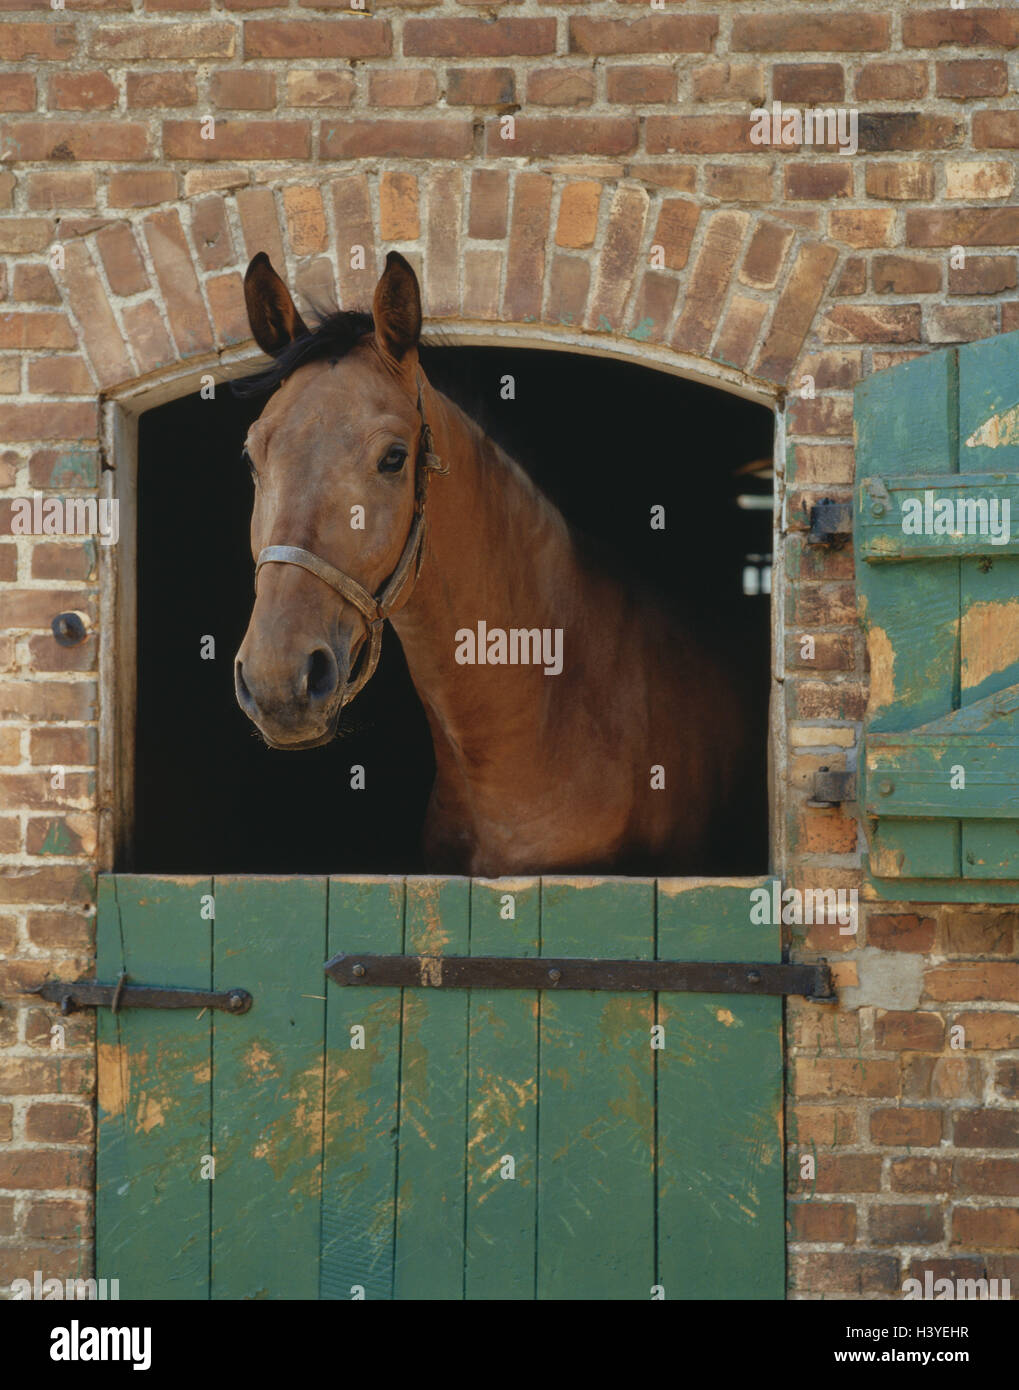 30++ Pony size stable door information